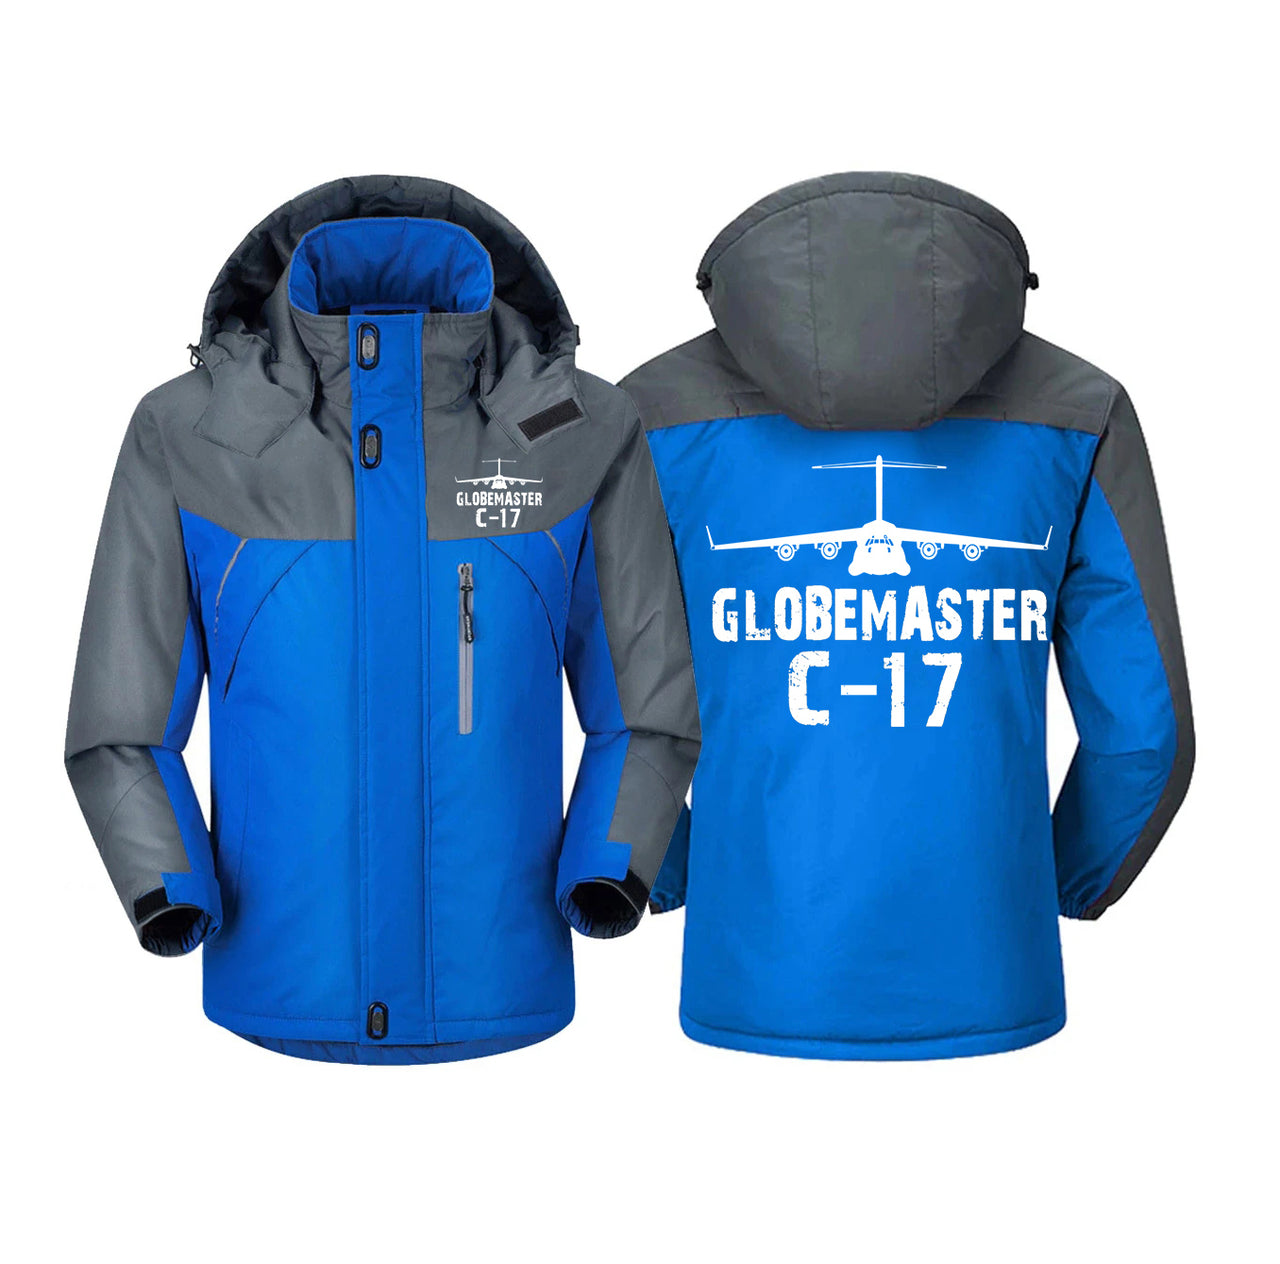 GlobeMaster C-17 & Plane Designed Thick Winter Jackets